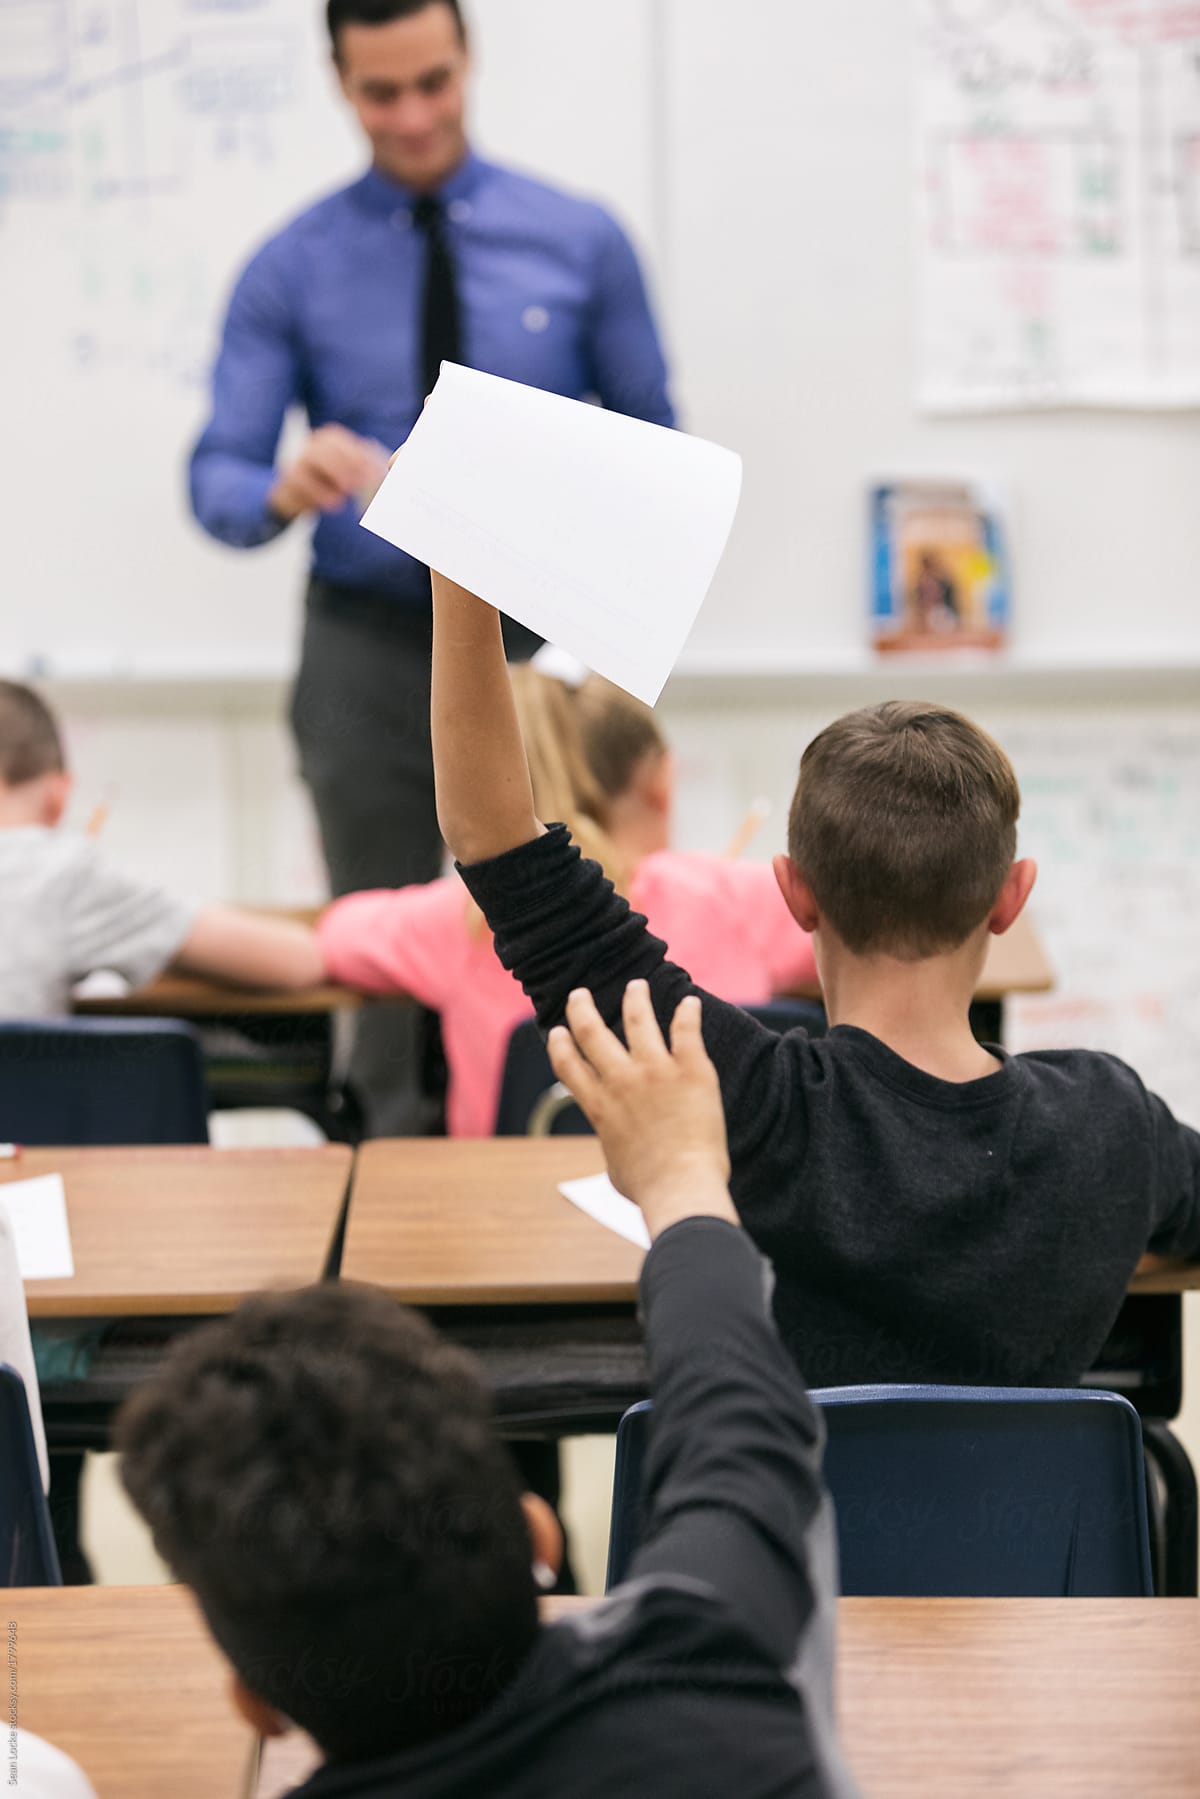 Classroom: Student Hands Back Paper